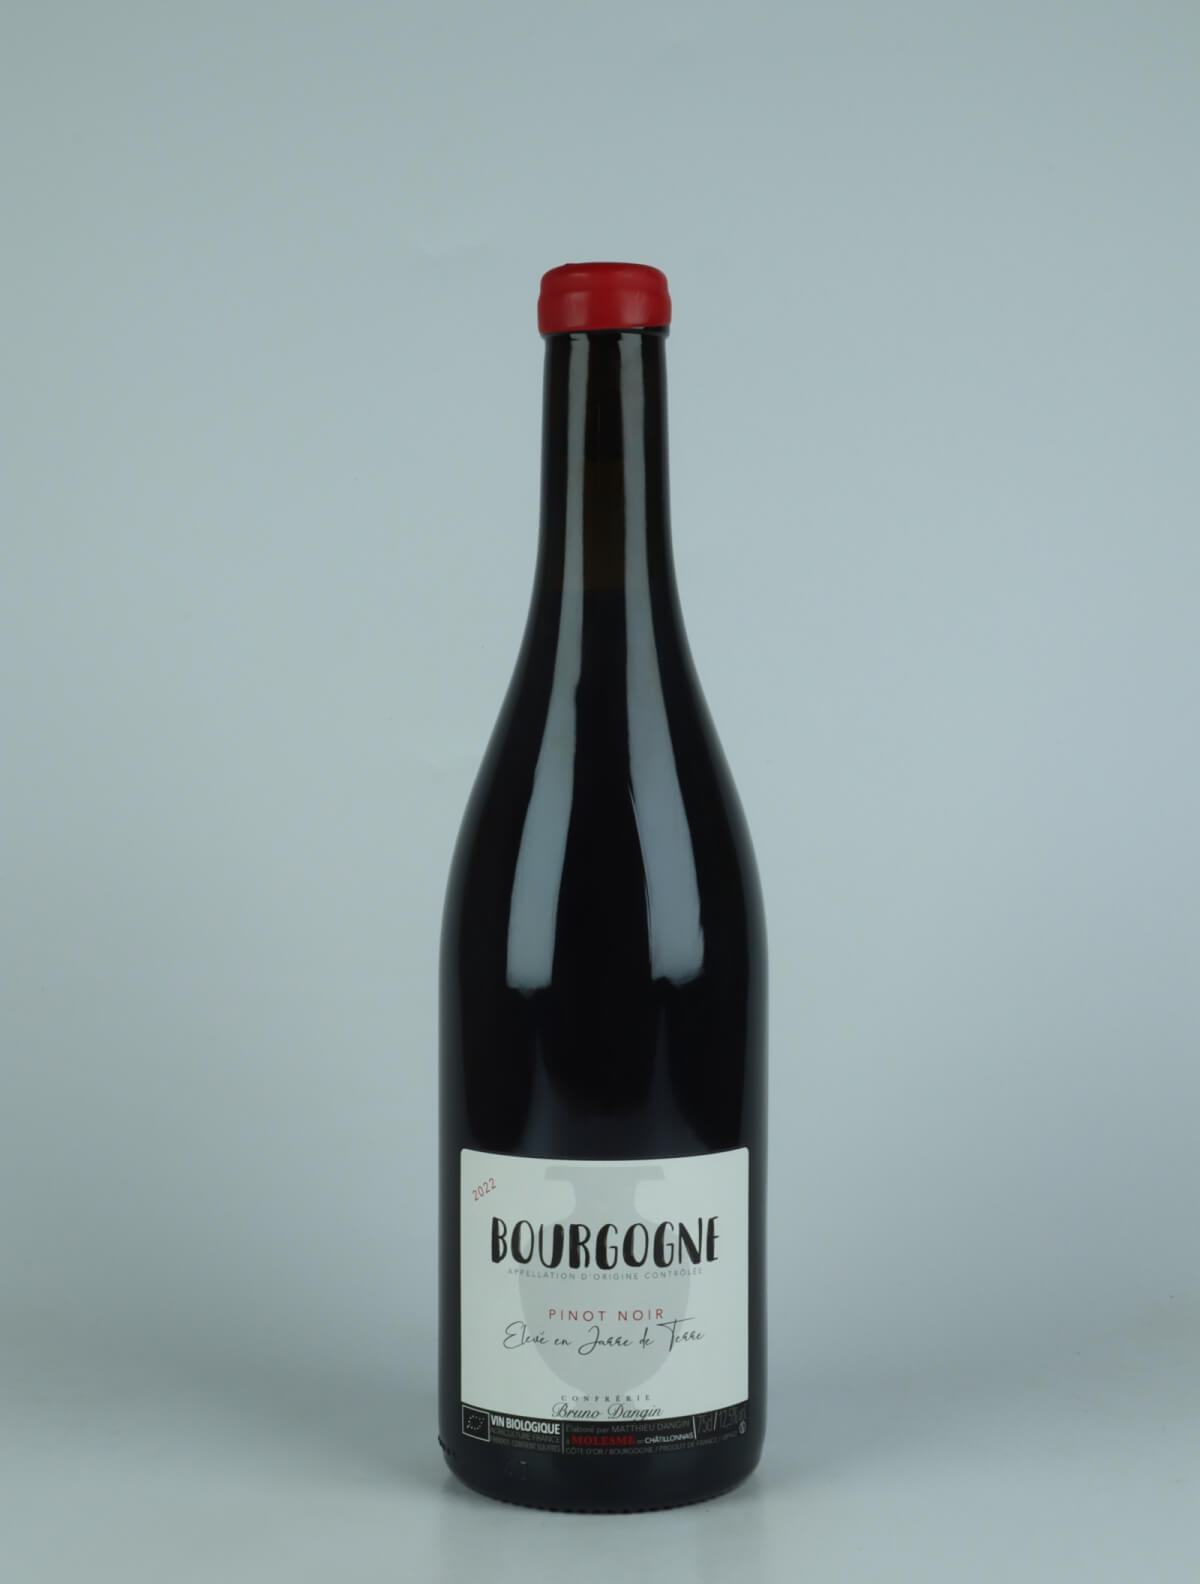 A bottle 2022 Bourgogne Pinot Noir Red wine from Domaine Bruno Dangin, Burgundy in France